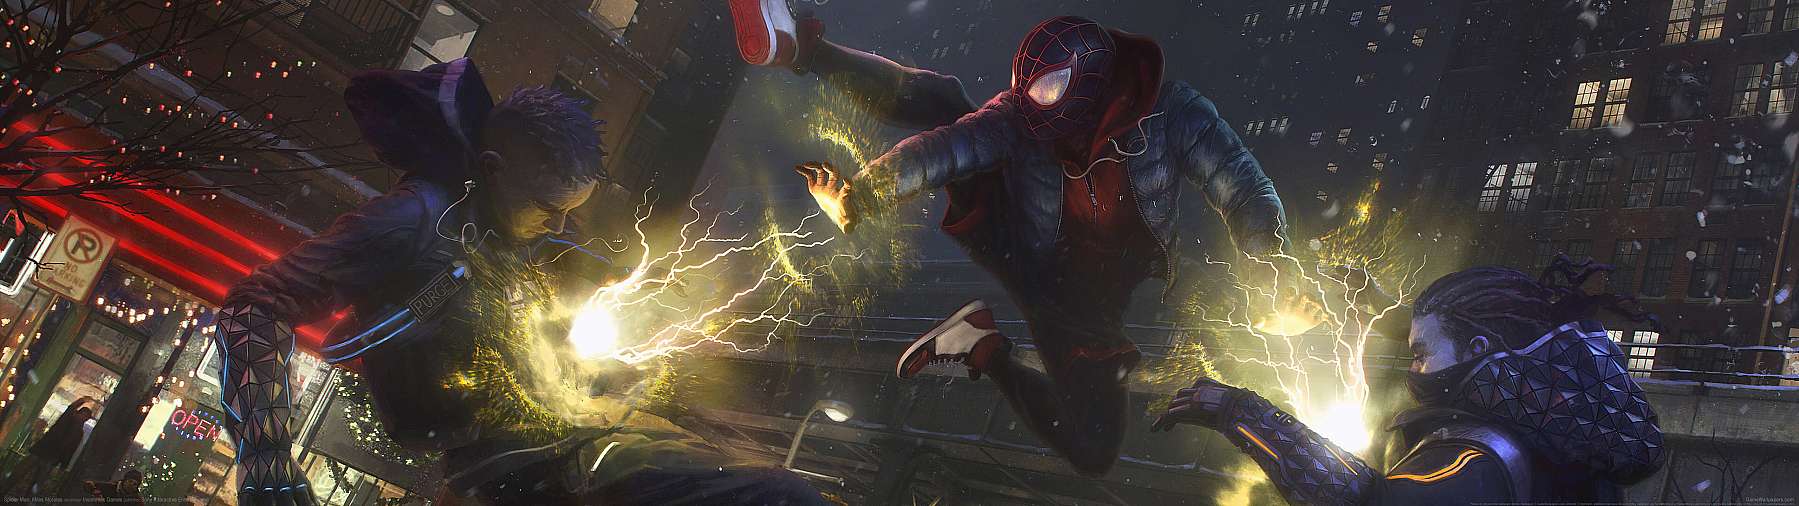 Spider-Man: Miles Morales superwide wallpaper or background 02